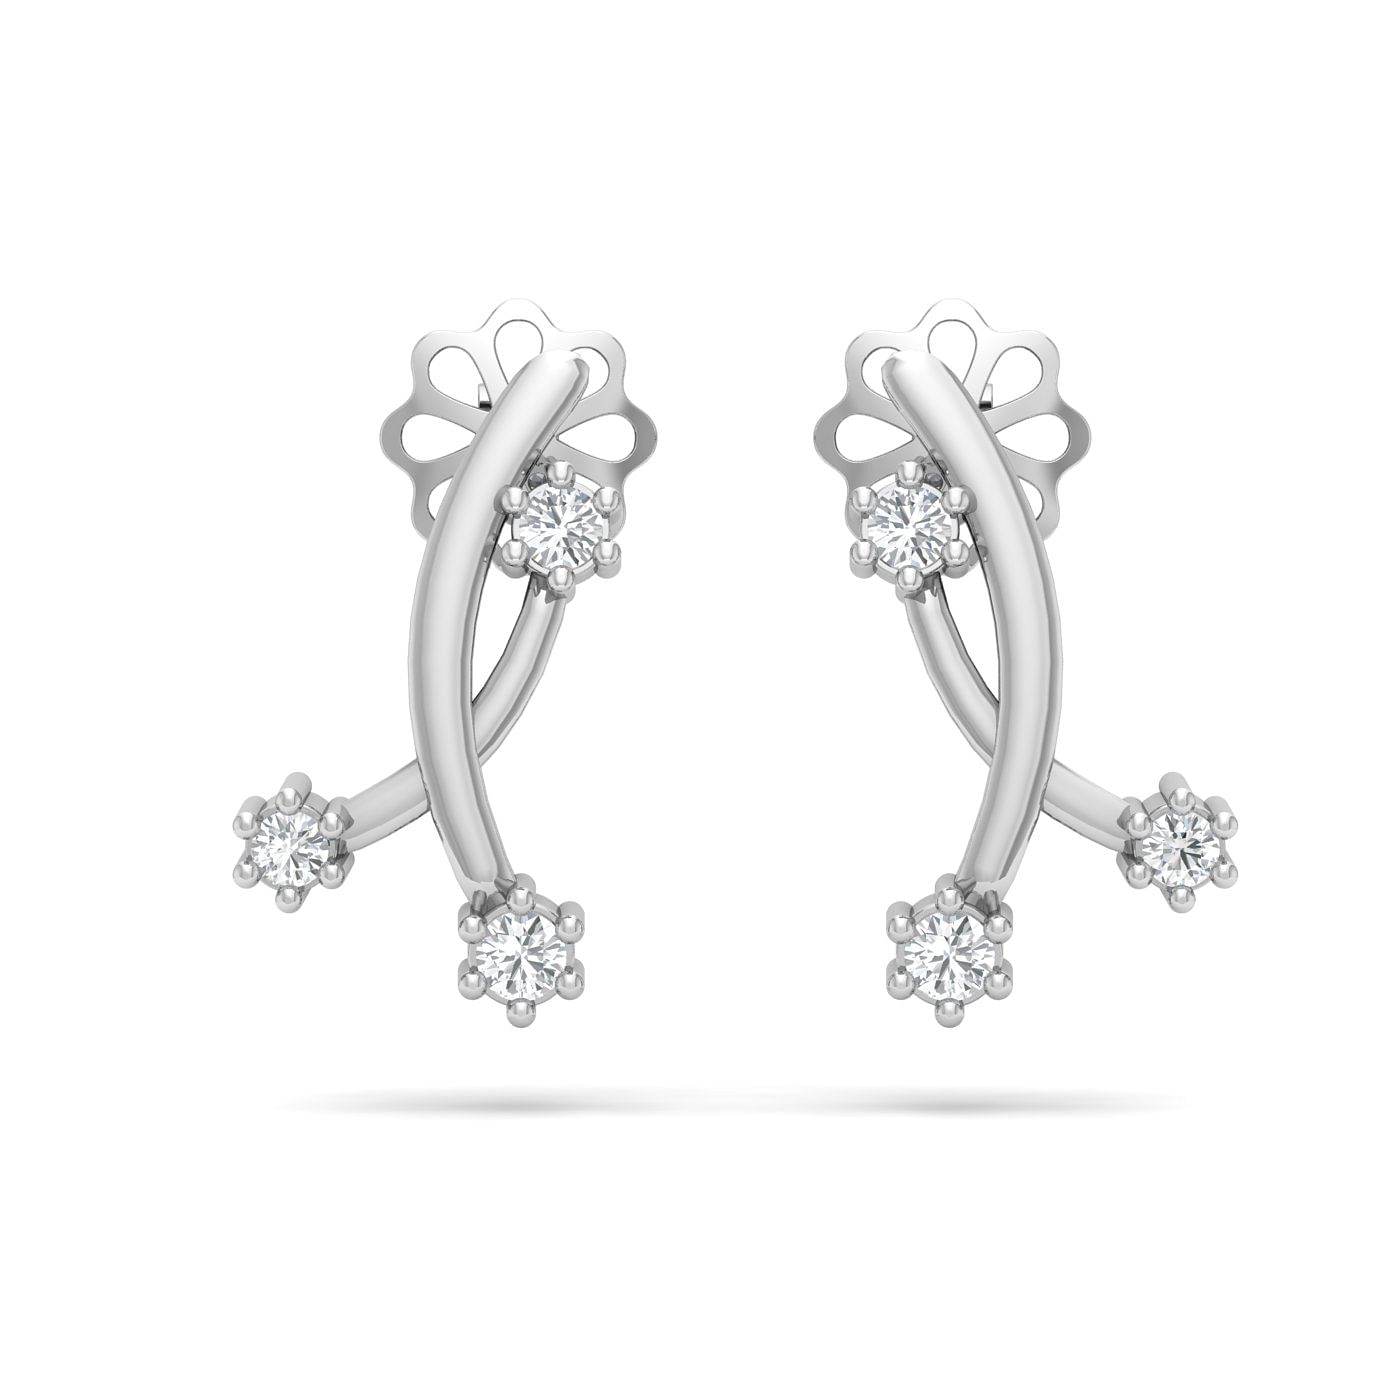 White gold Leah Diamond Stud Earrings